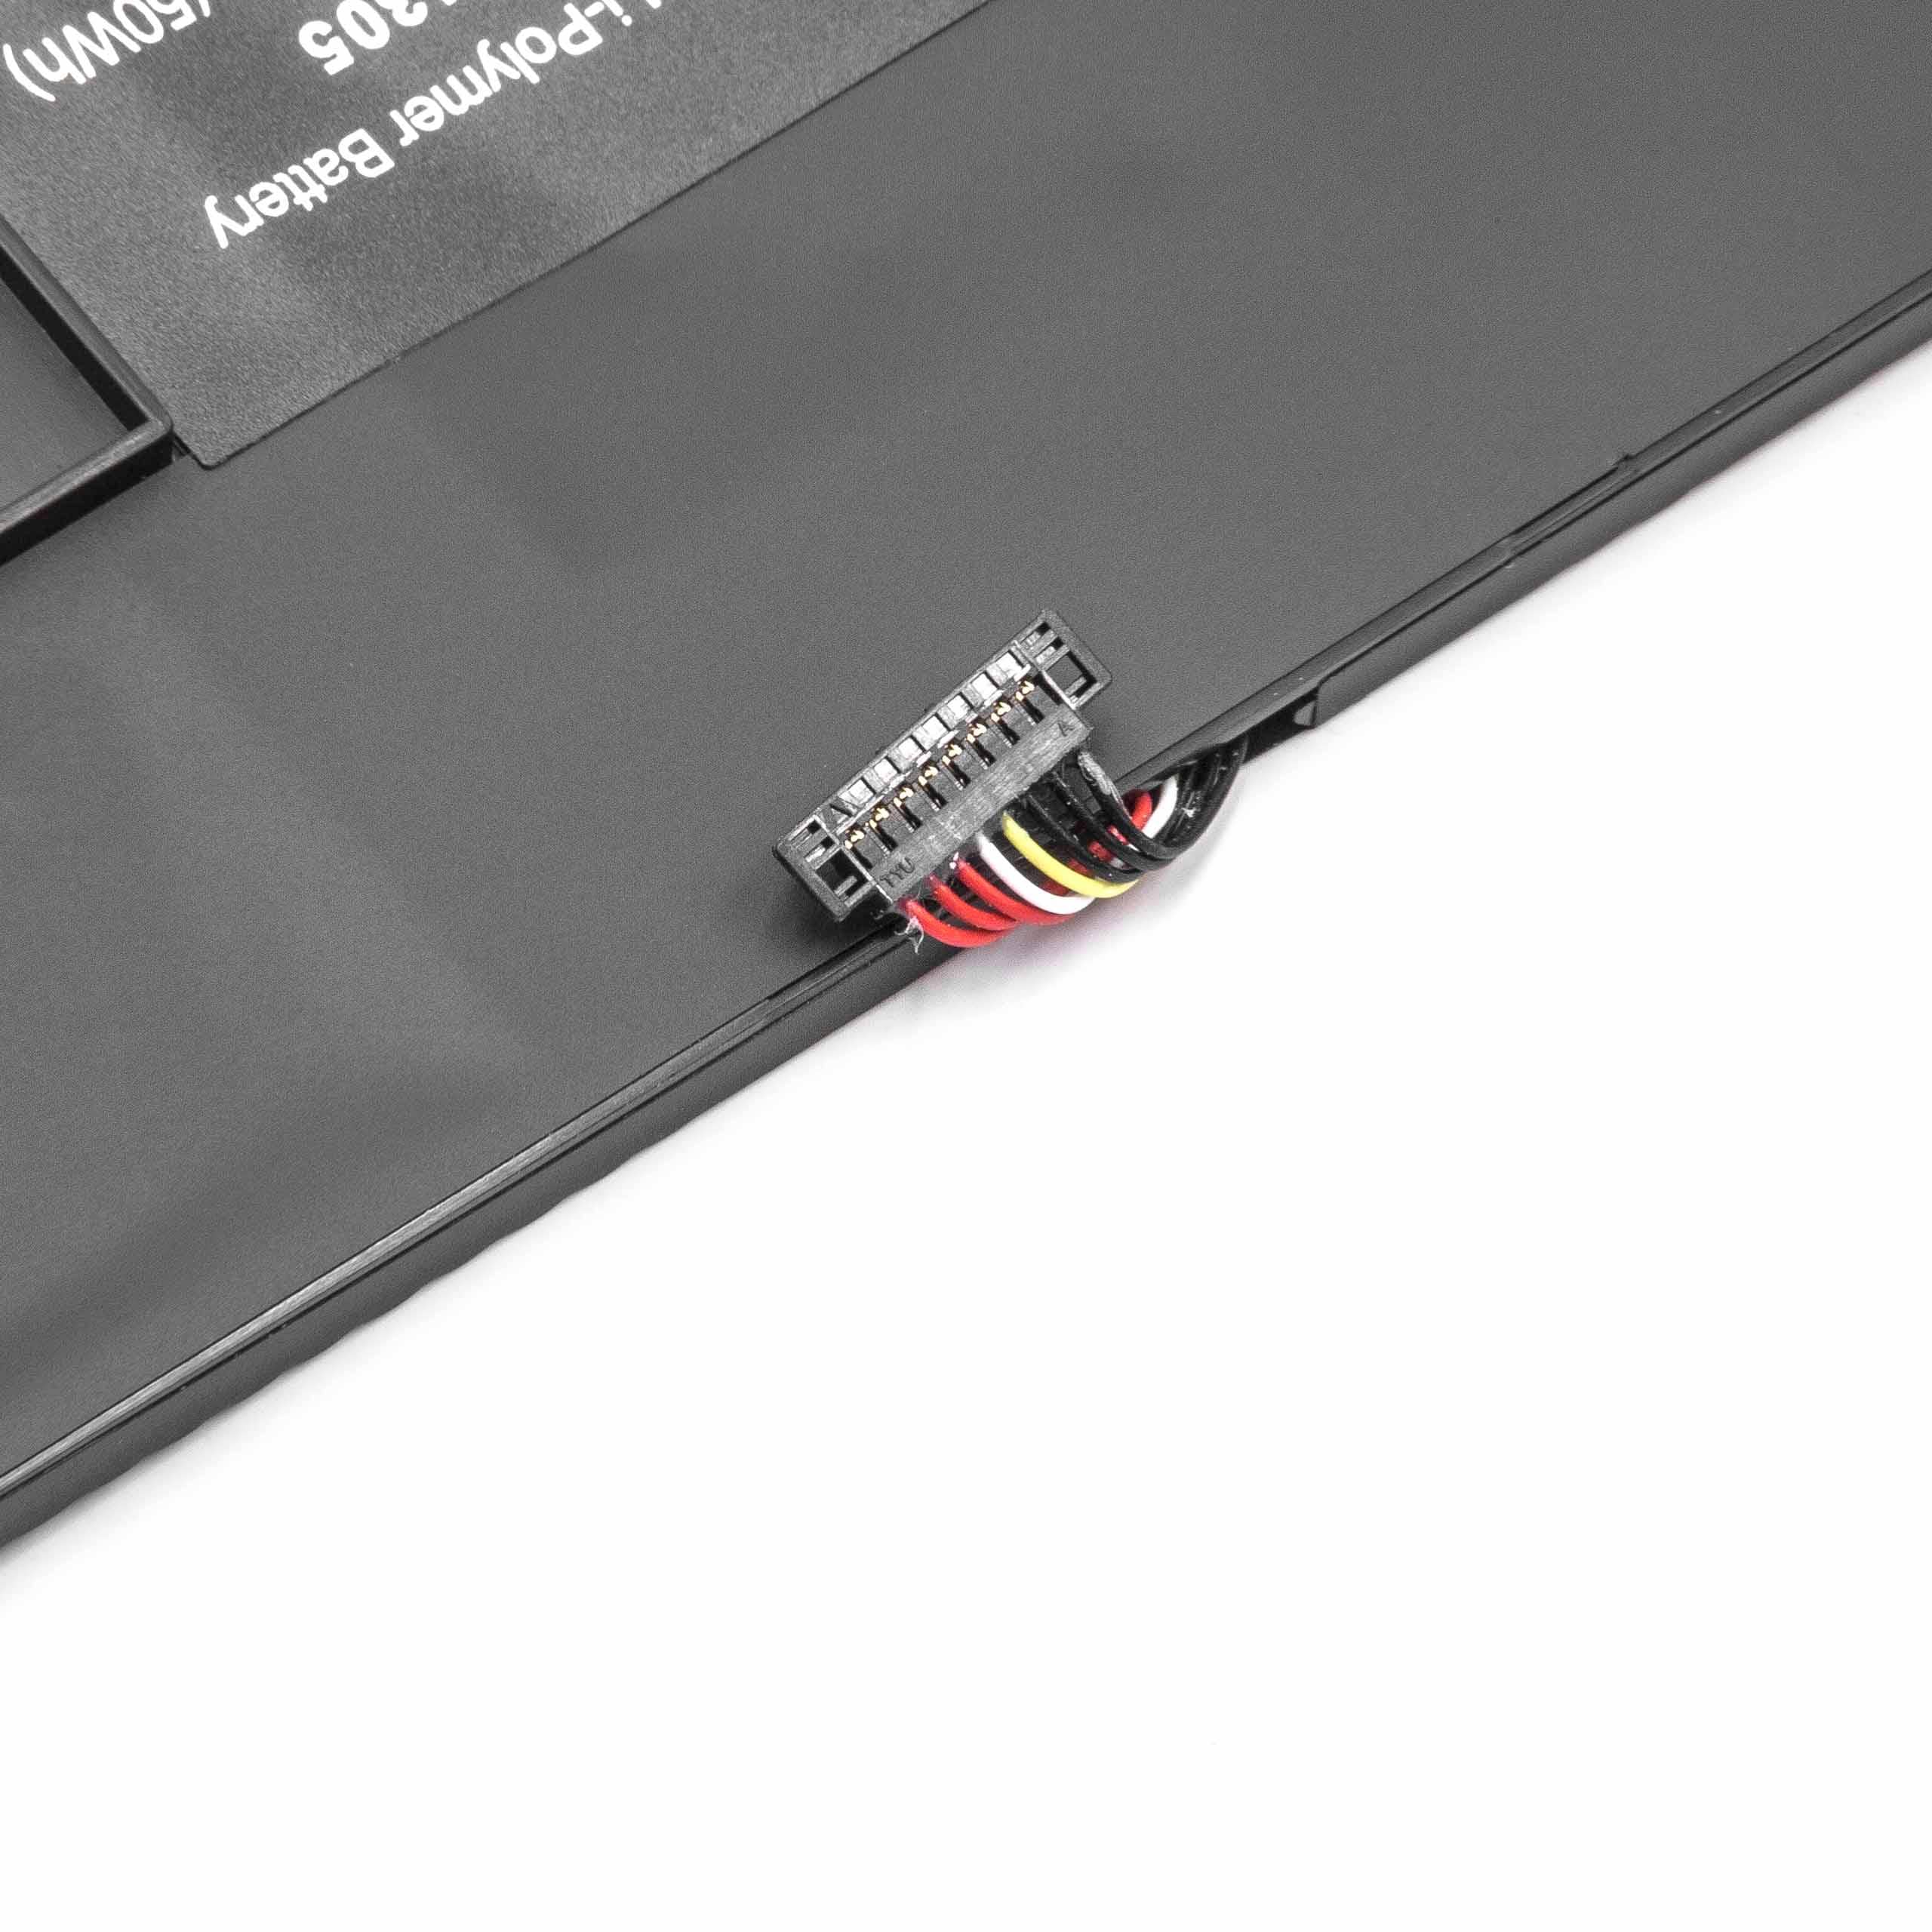 Notebook Battery Replacement for Asus C32N1305, C32N-1305, 0B200-00540000 - 4500mAh 11.1V Li-polymer, black